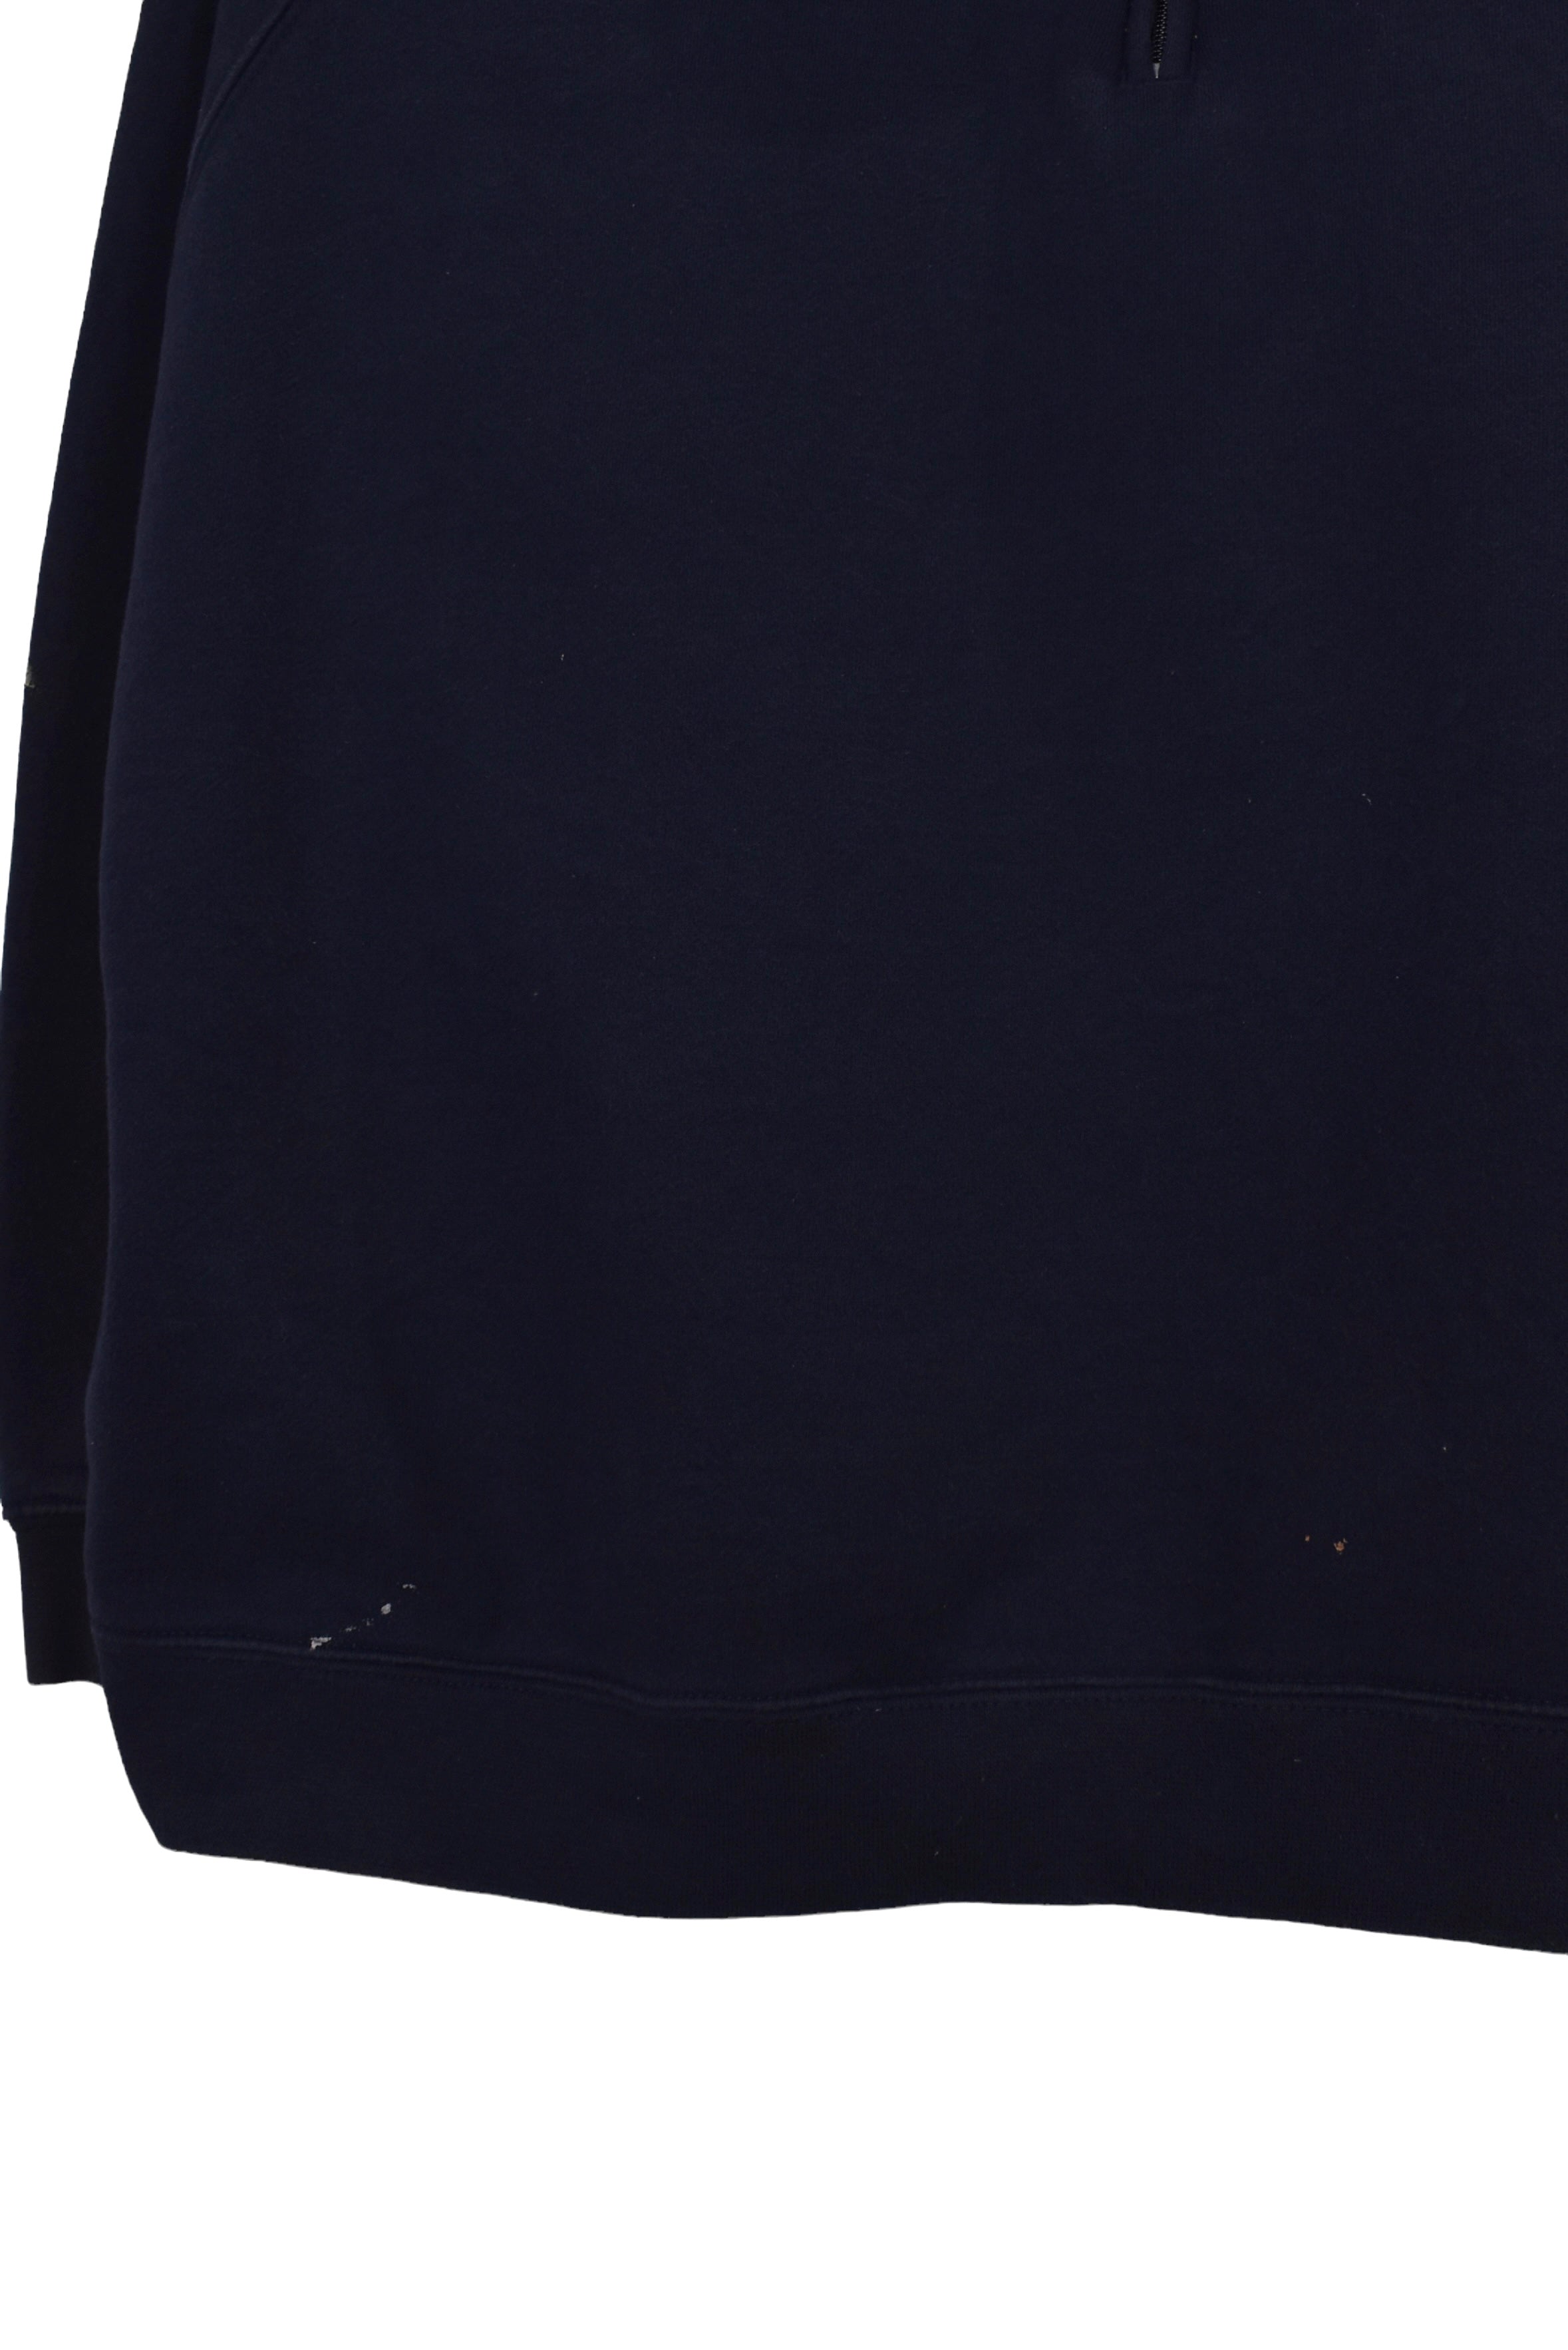 Vintage Reebok 1/4 zip (L), navy embroidered sweatshirt